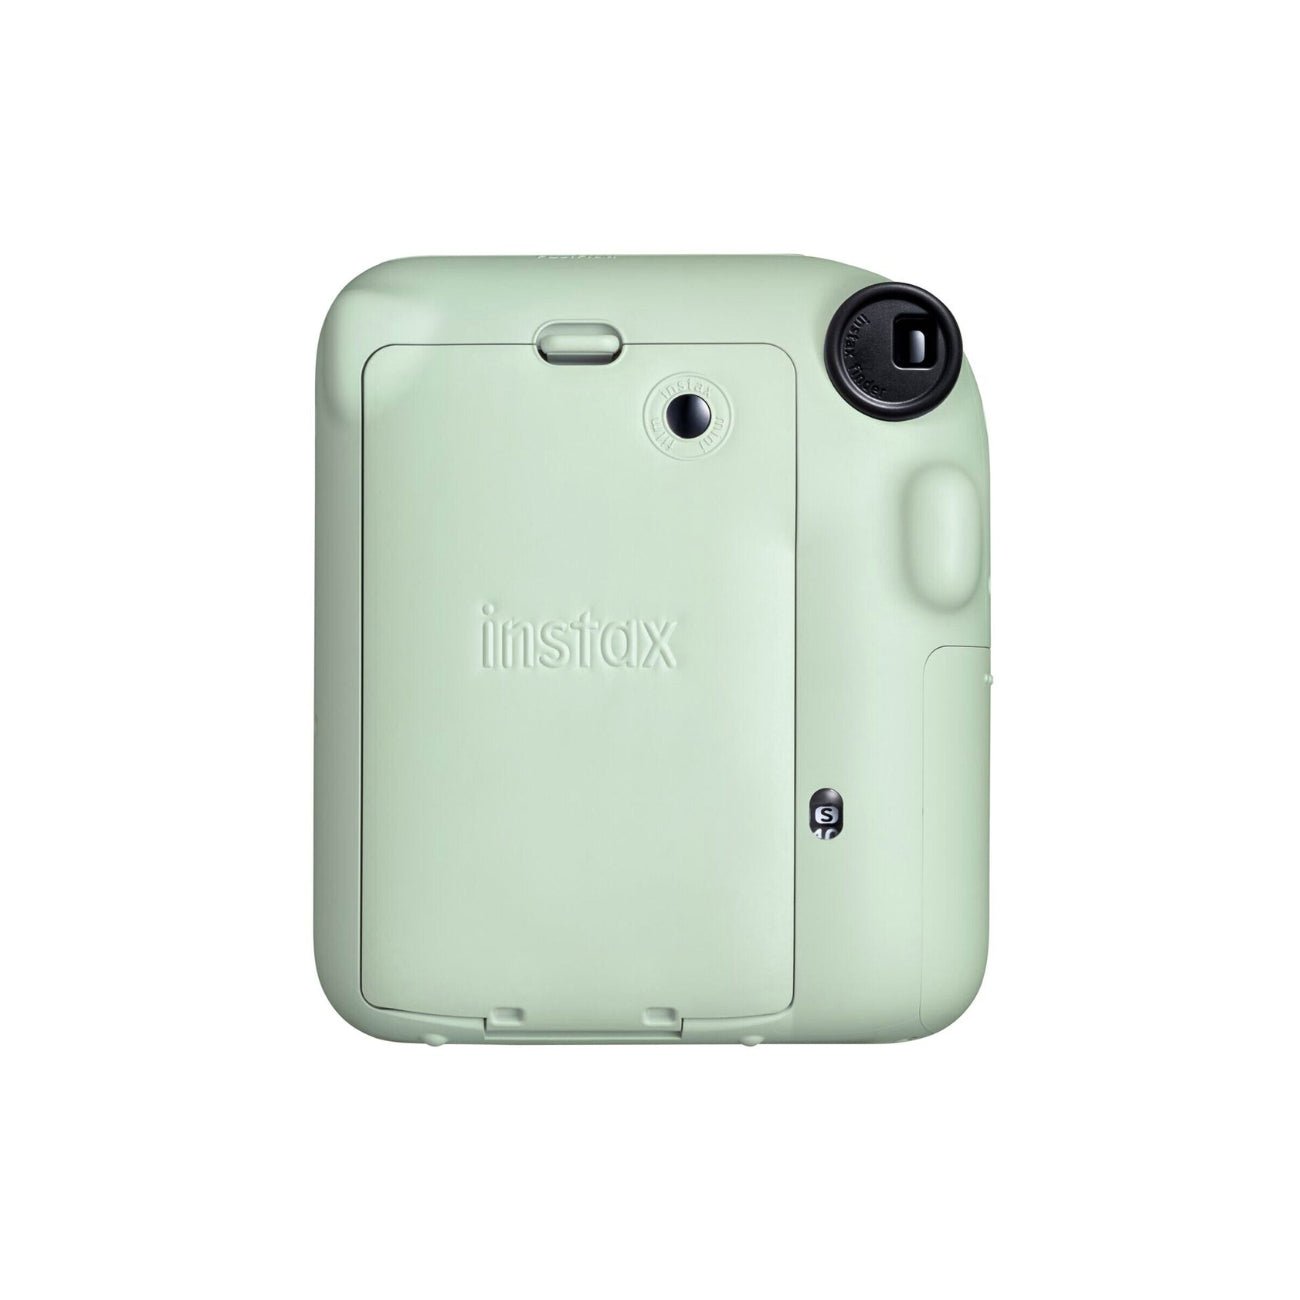  Fujifilm Instax Mini 12 Instant Film Camera, Clay White :  Electronics